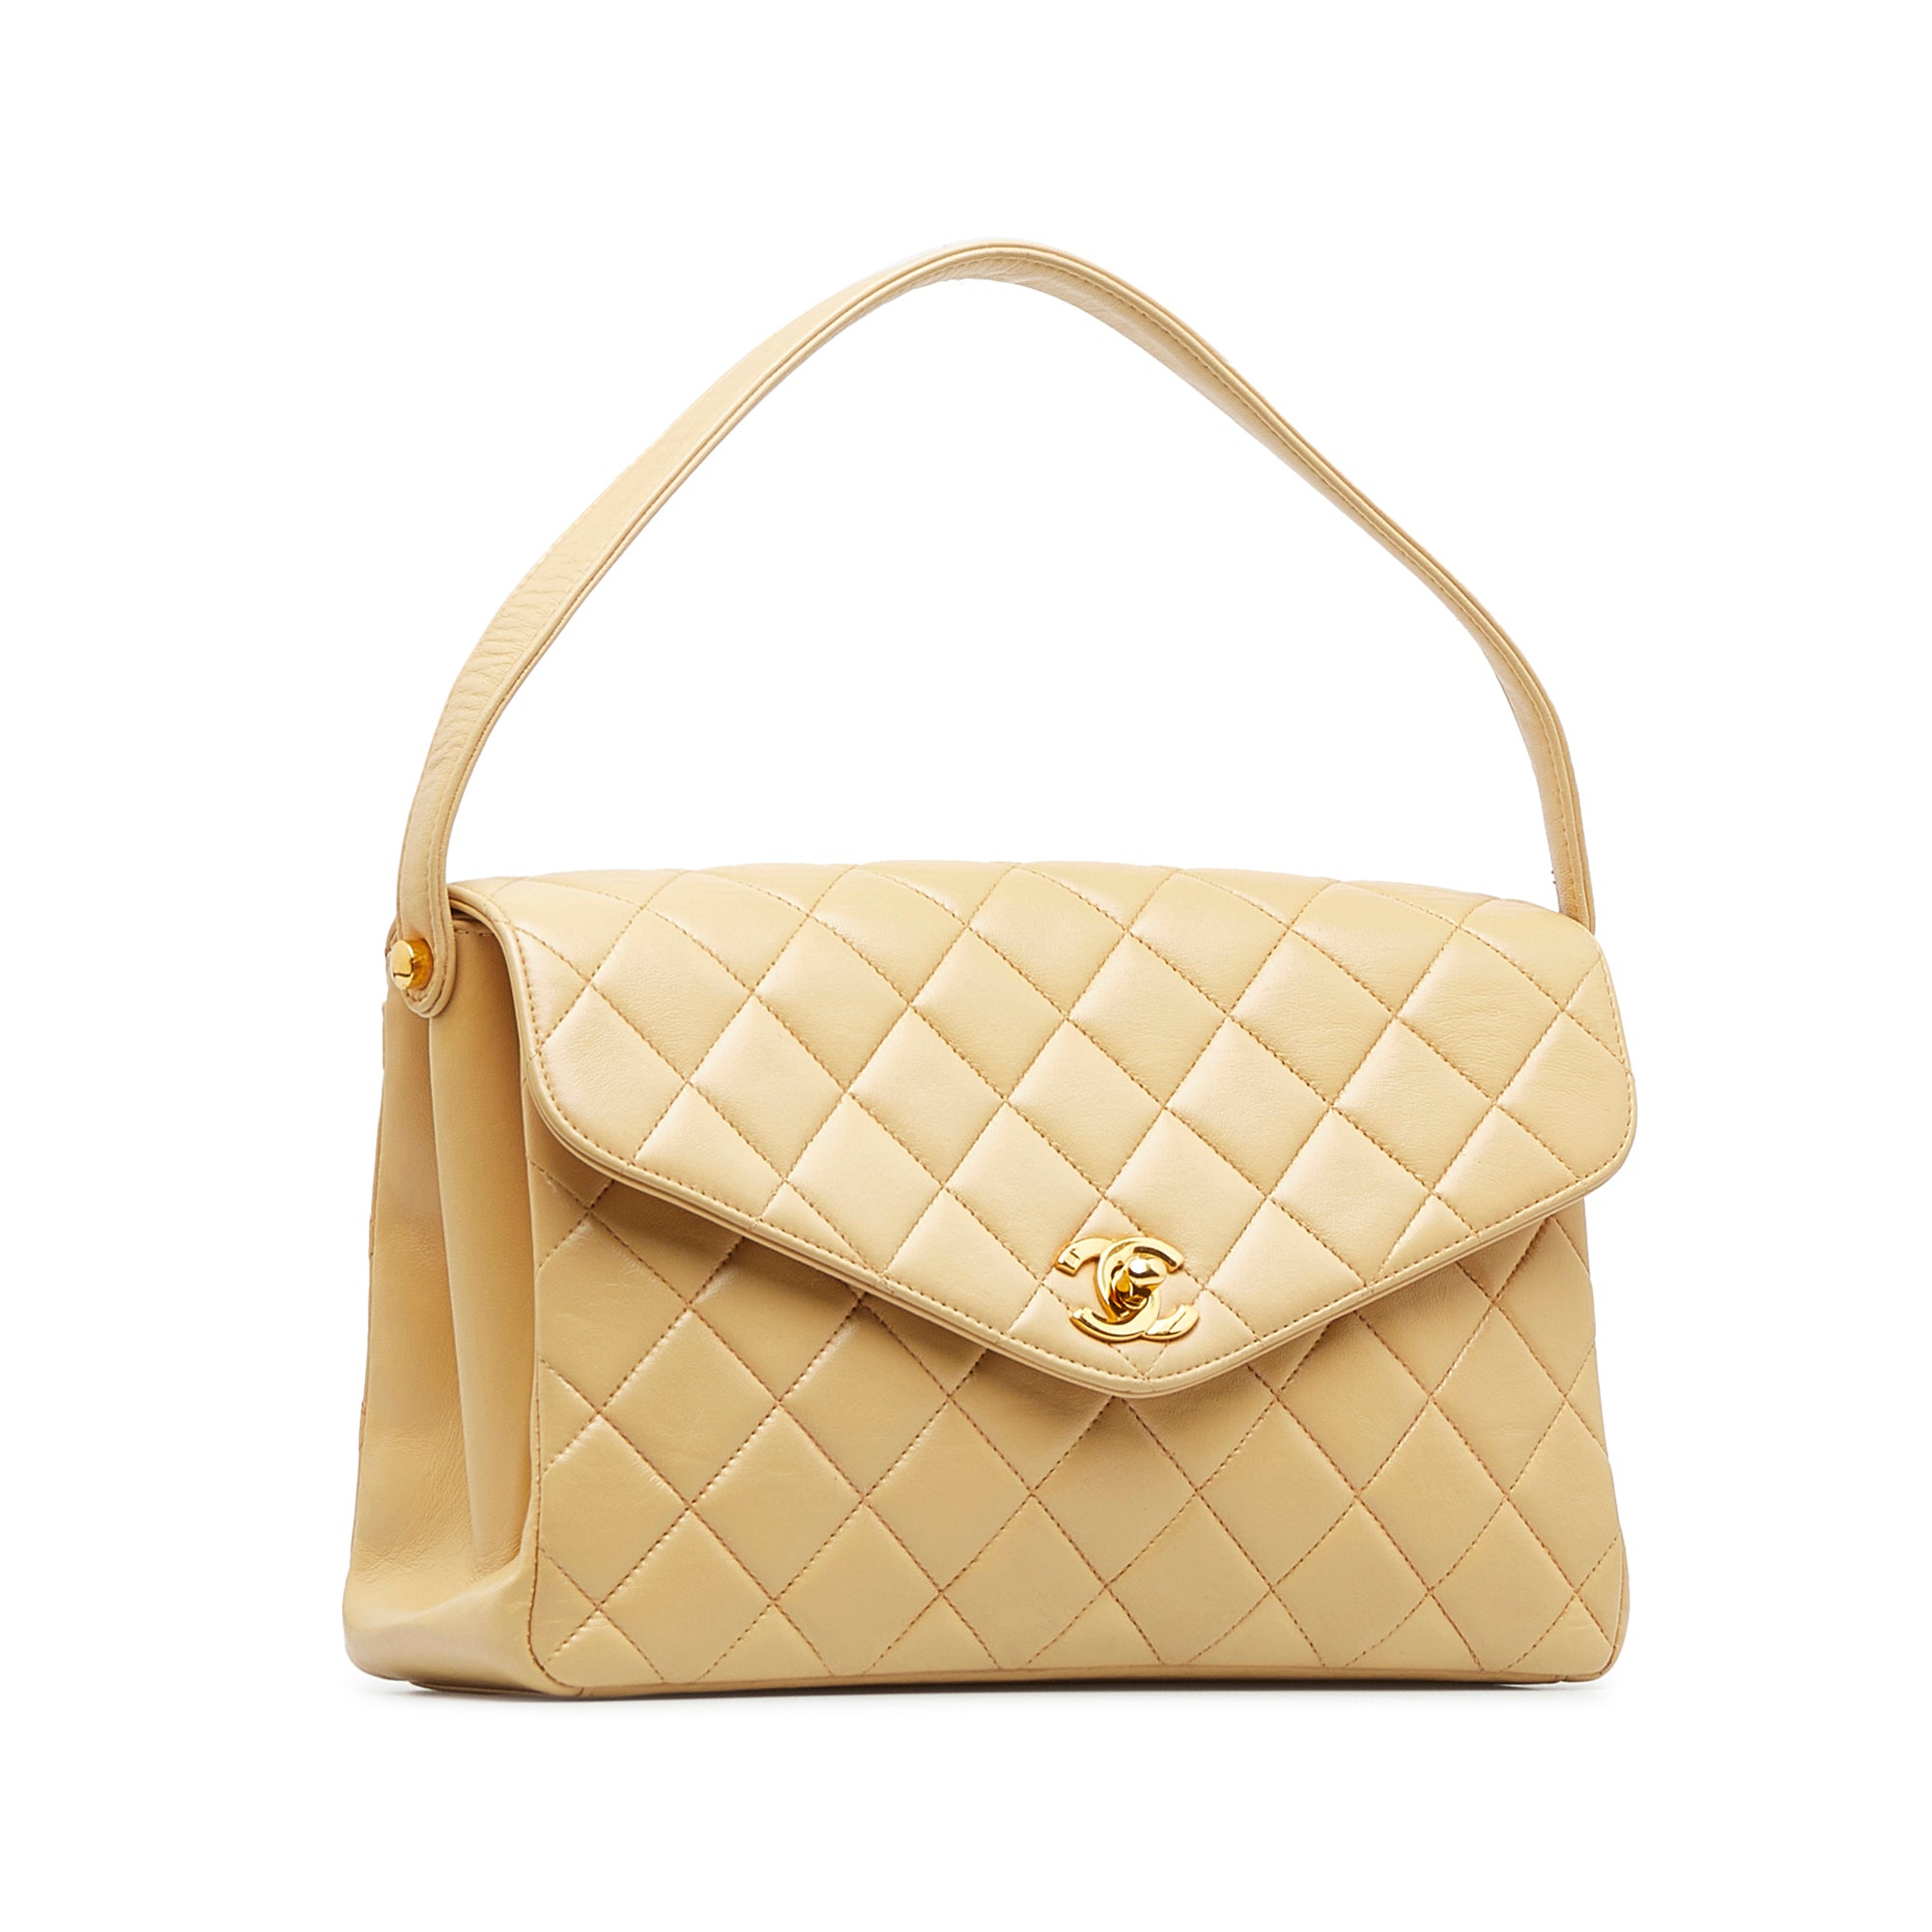 Tan Chanel Medium Lambskin Envelope Flap Handbag